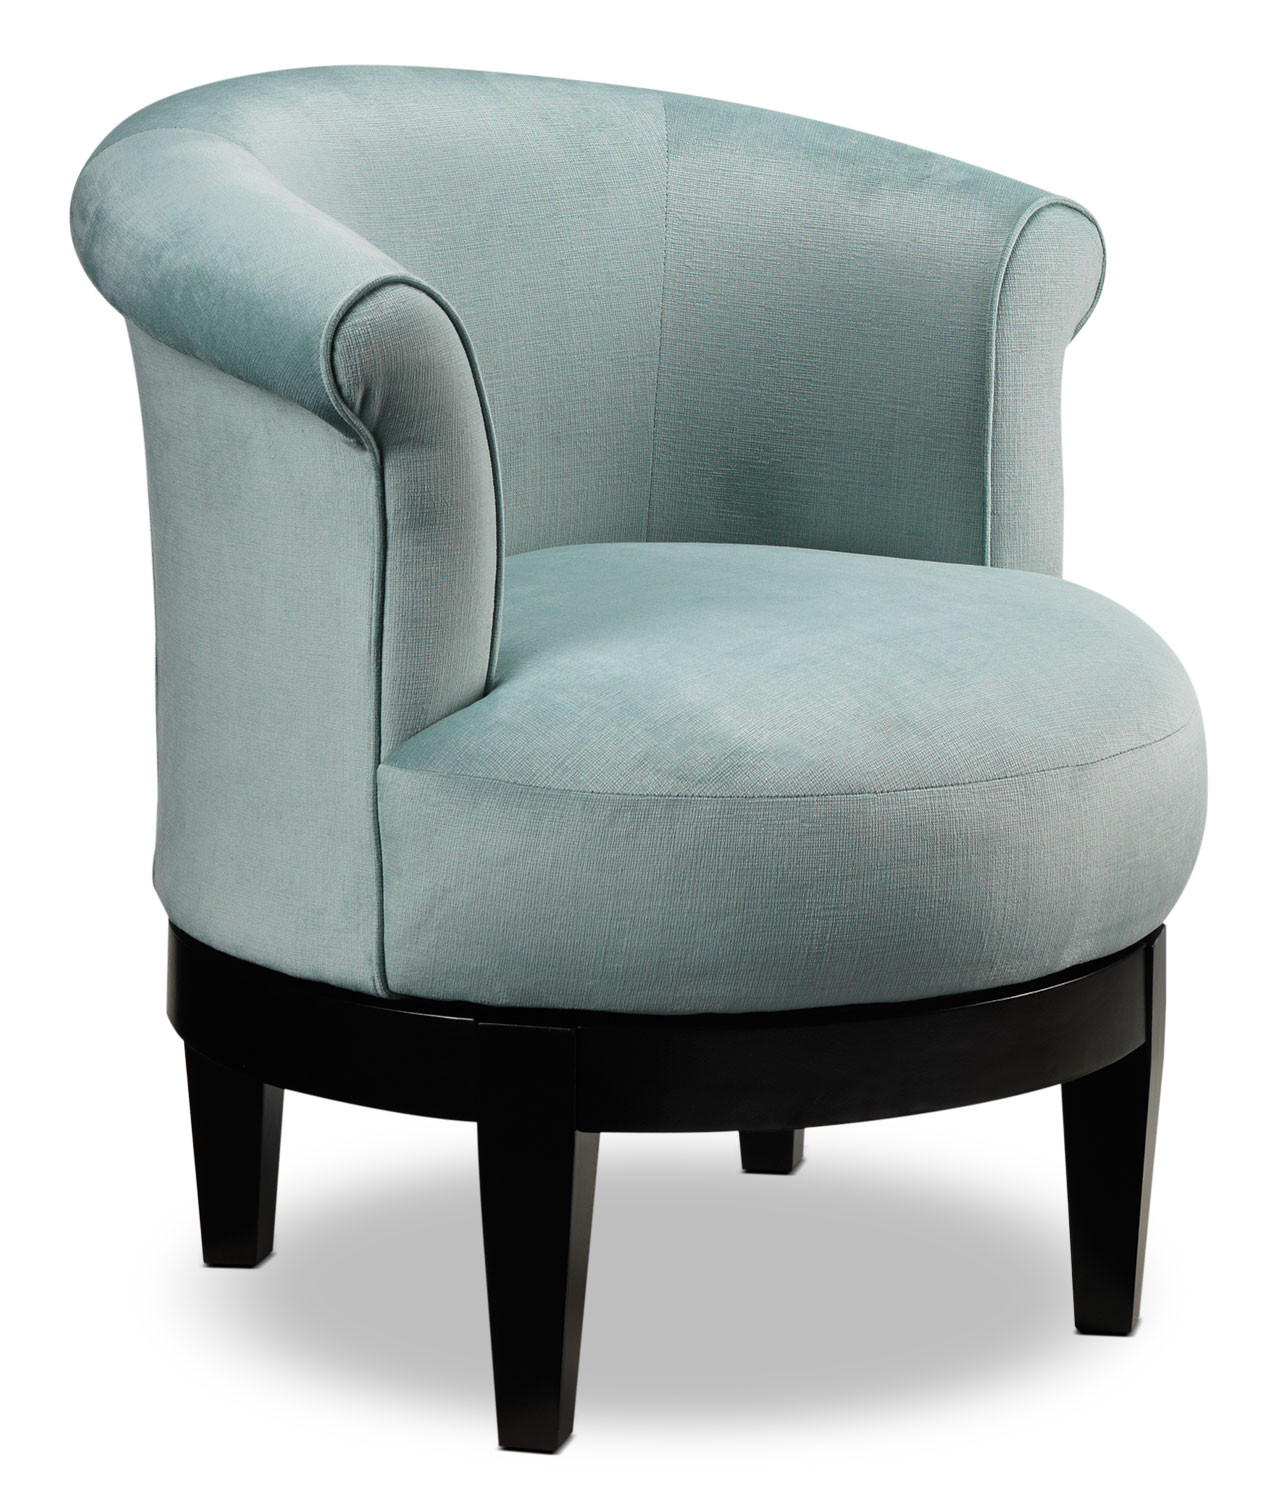 Accent Chairs Living Room
 Attica Swivel Accent Chair Aqua